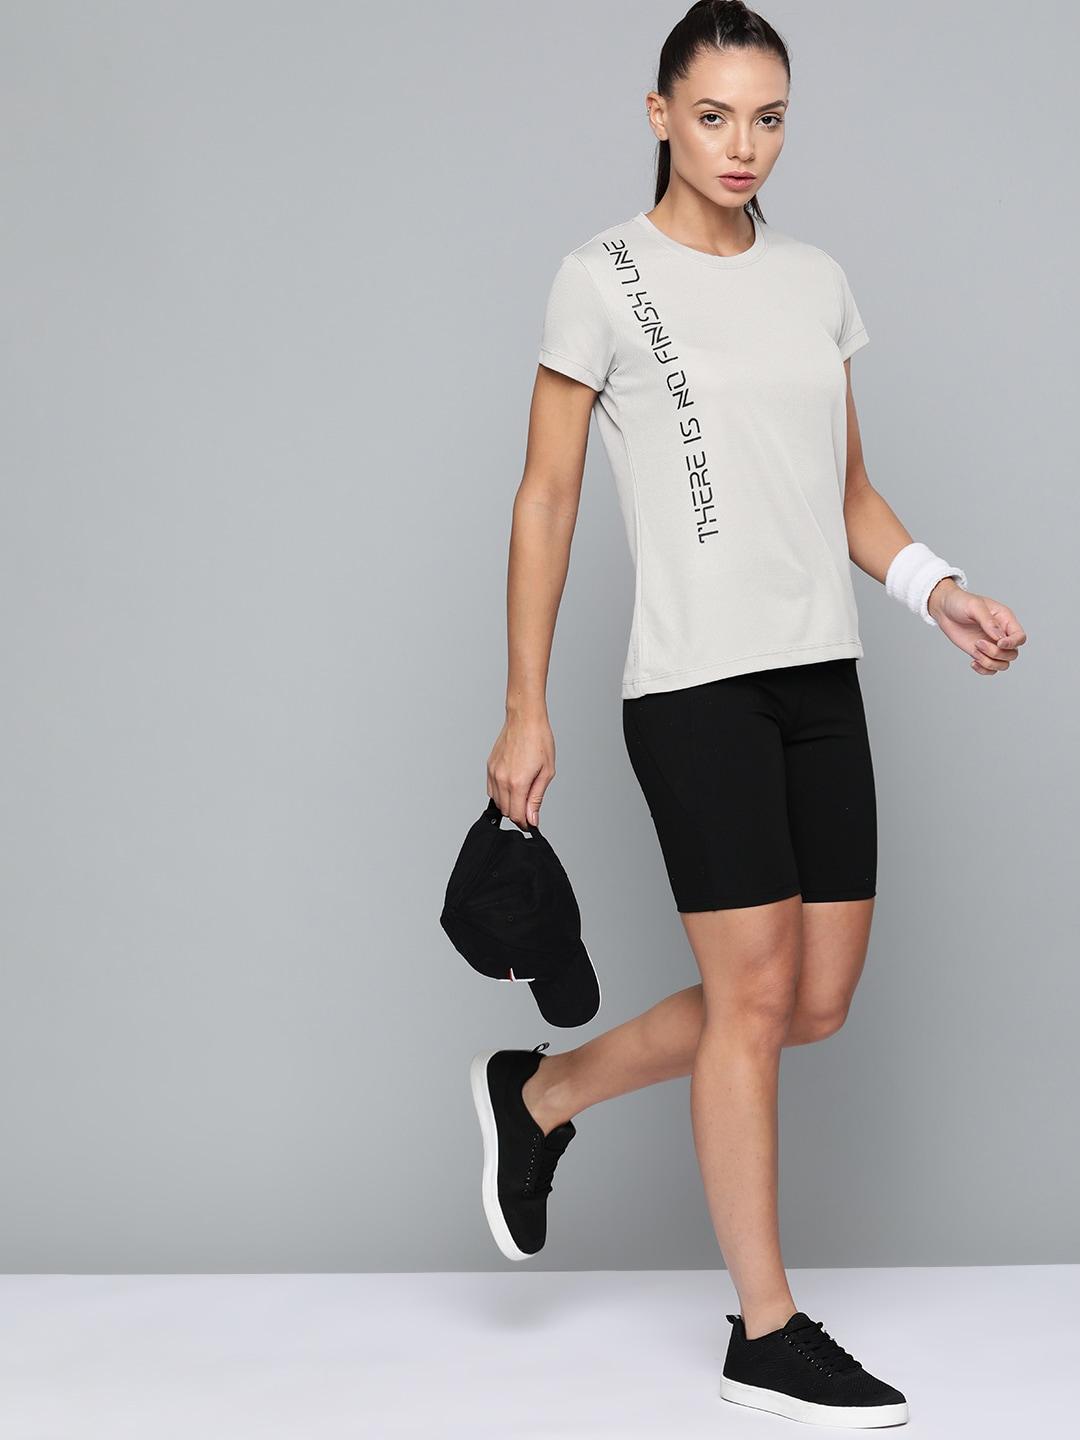 hrx-by-hrithik-roshan-running-women-wet-weather-rapid-dry-typography-tshirts